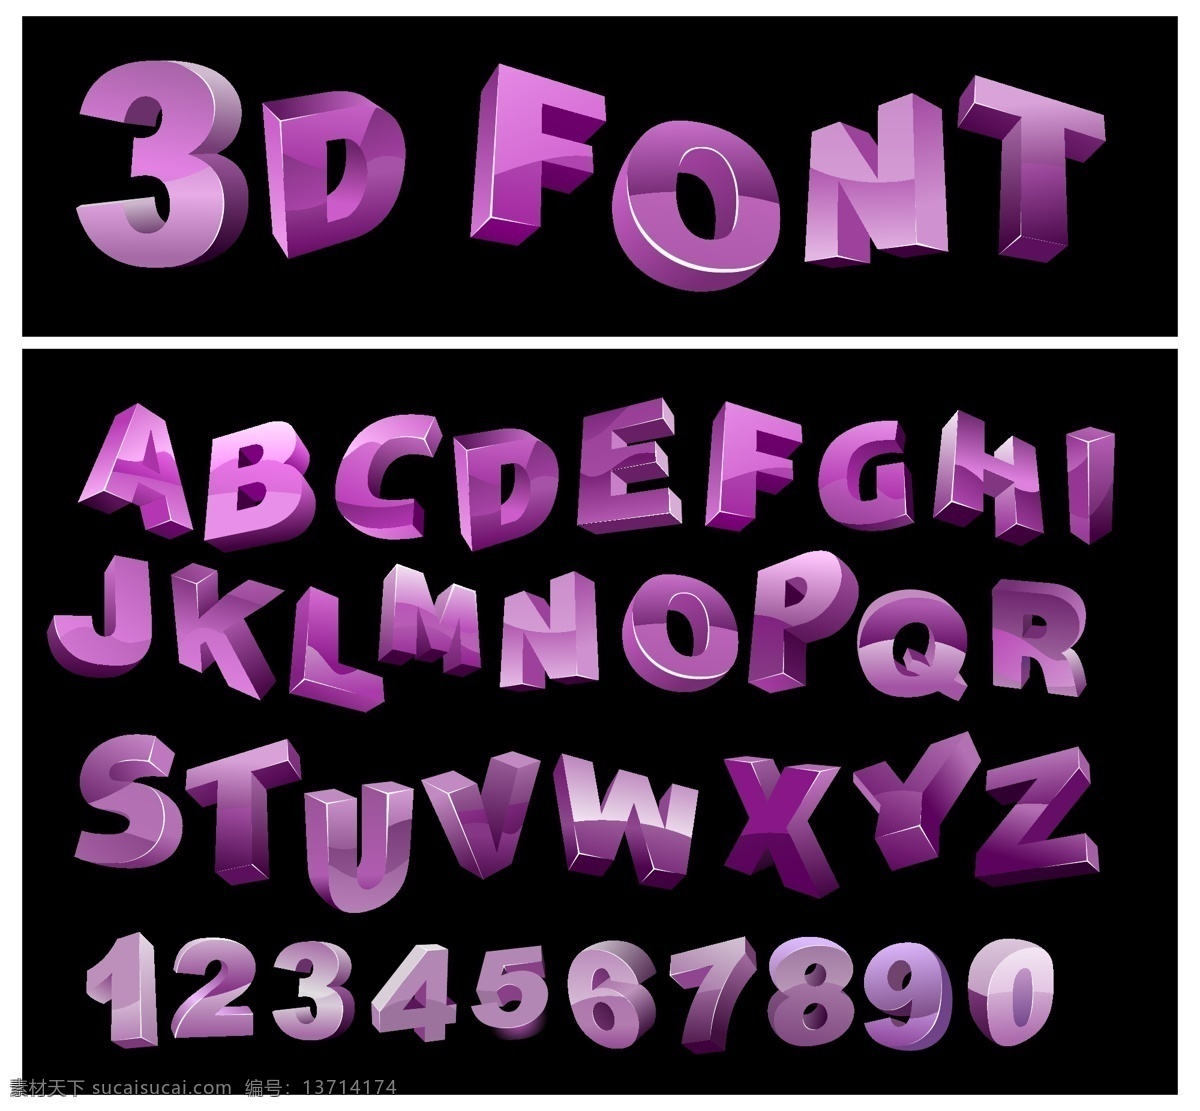 3d 变形字母 创意字母 立体 拼音 其他设计 时尚 时尚字母 紫色 拼音字母 数字 矢量 模板下载 字母 英文 英文字体 英文艺术字 字母设计 艺术字母 英文签名 设计字母 字母主题 矢量图